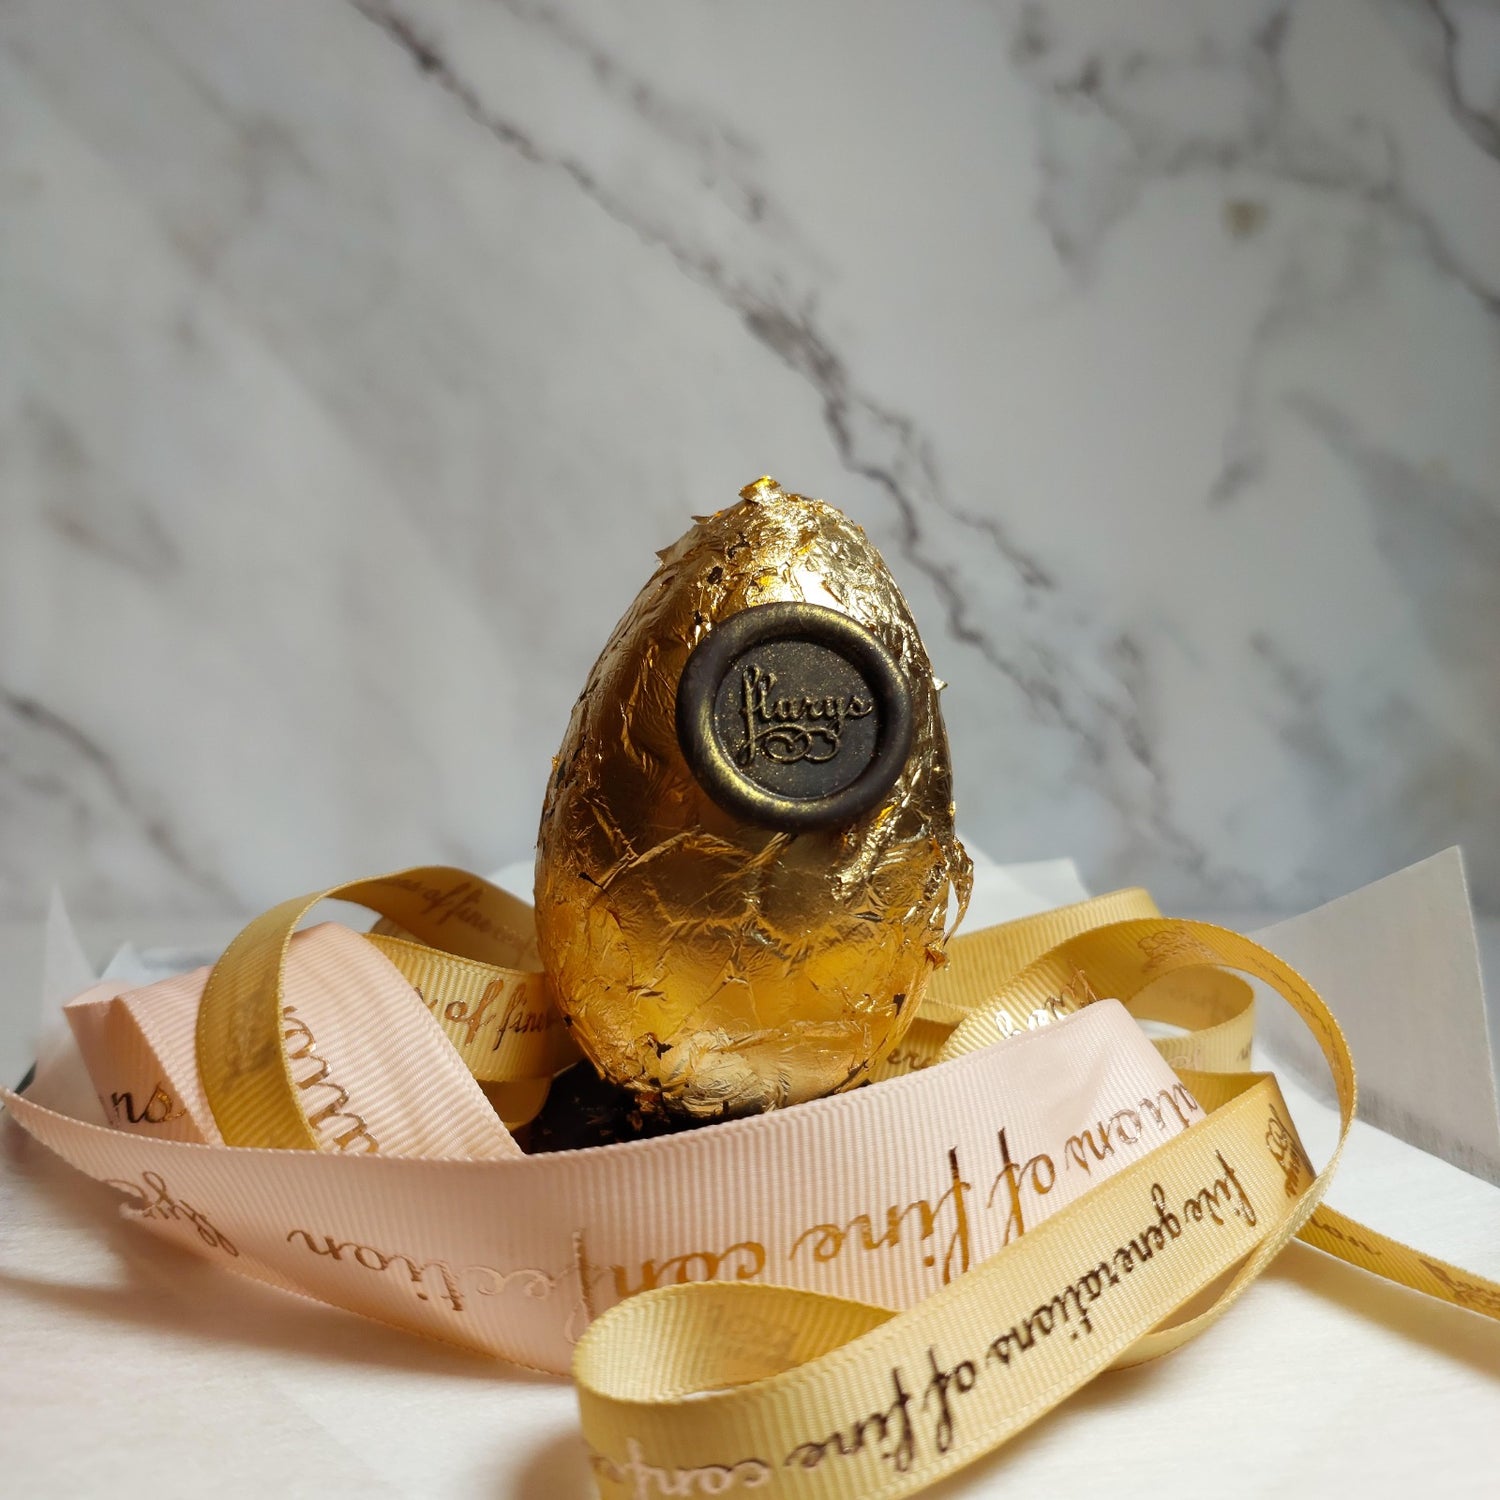 Easter Connosieurs Gold Leaf covered egg